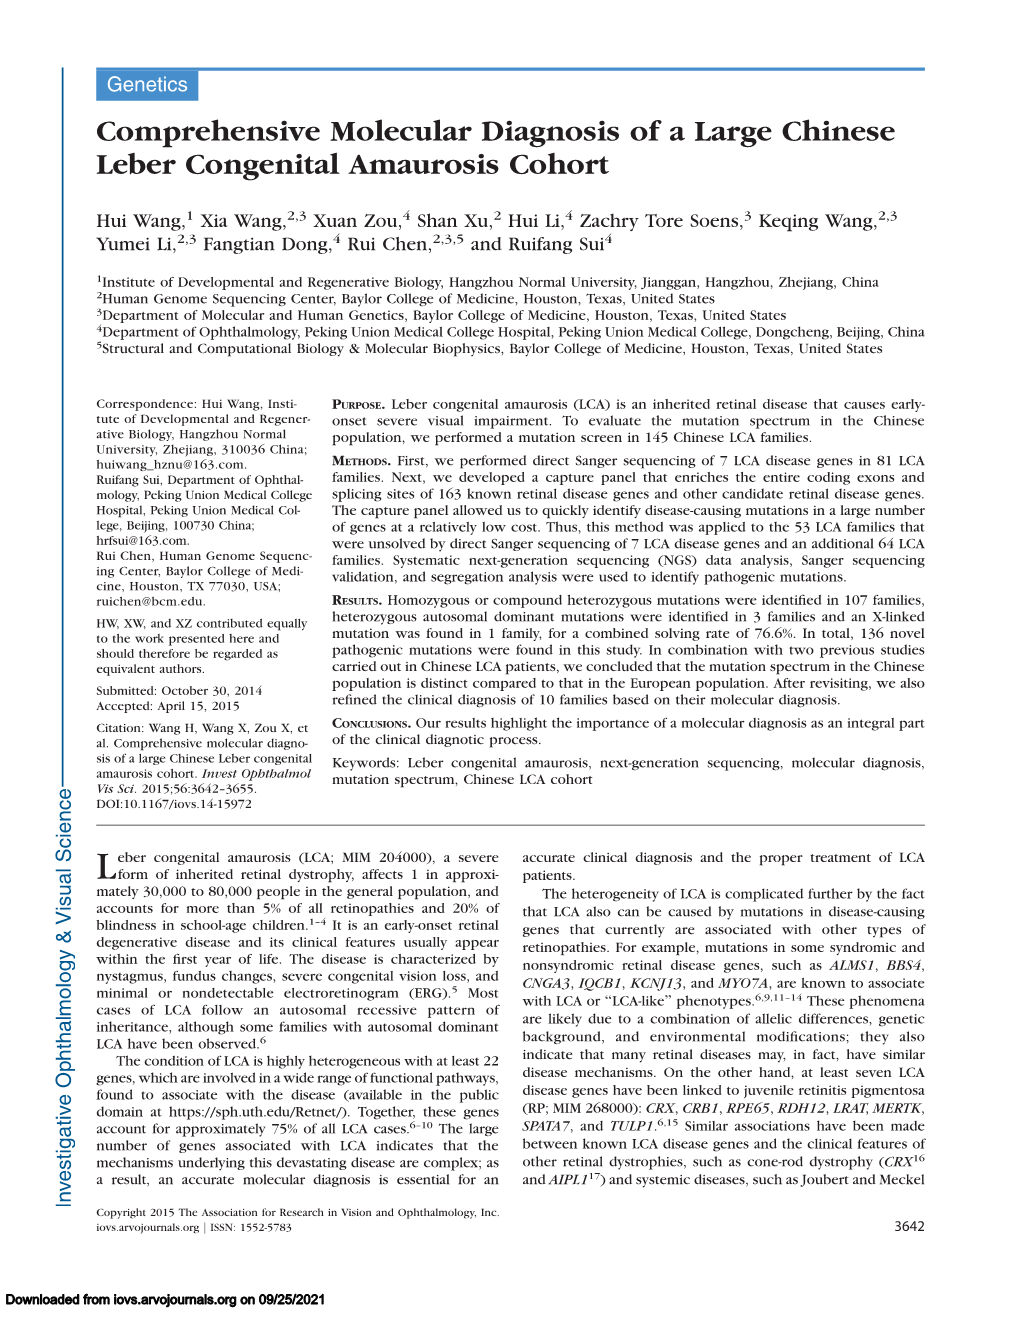 Comprehensive Molecular Diagnosis of a Large Chinese Leber Congenital Amaurosis Cohort